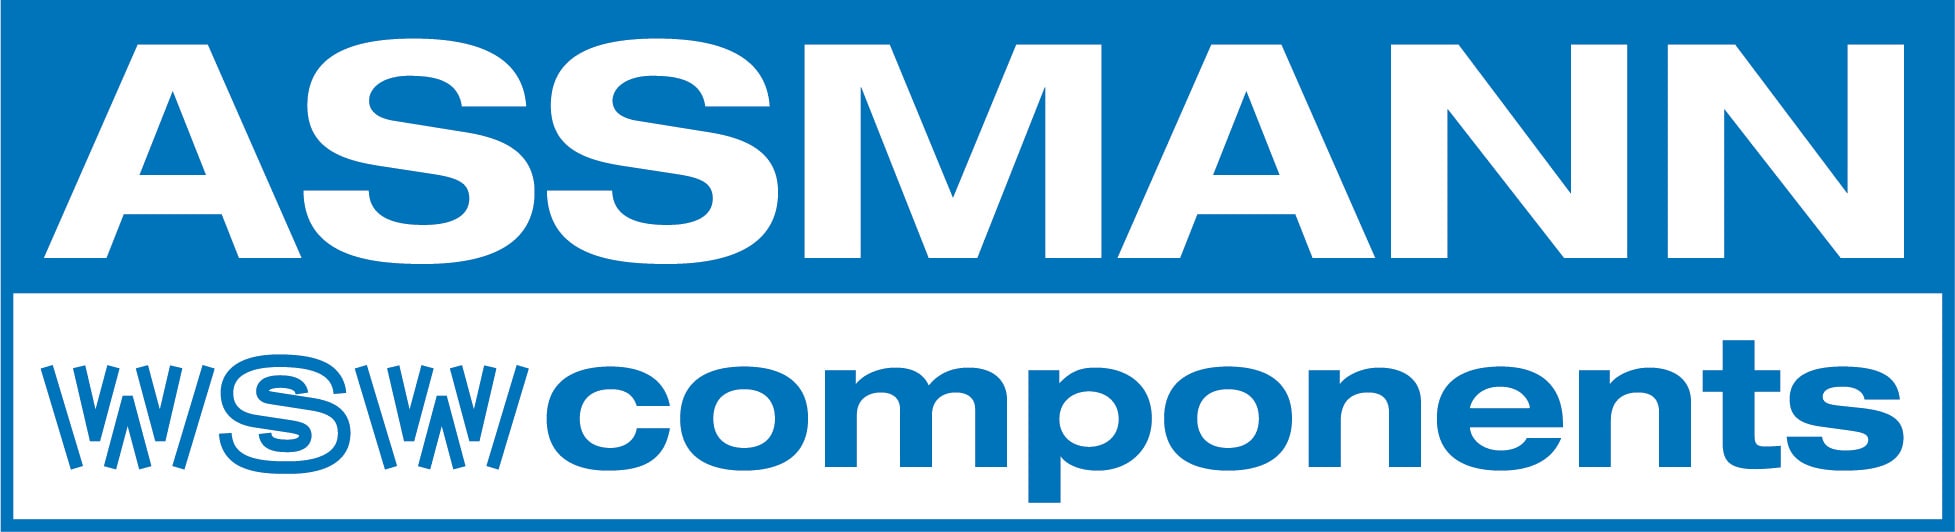 Assmann WSW components, Inc